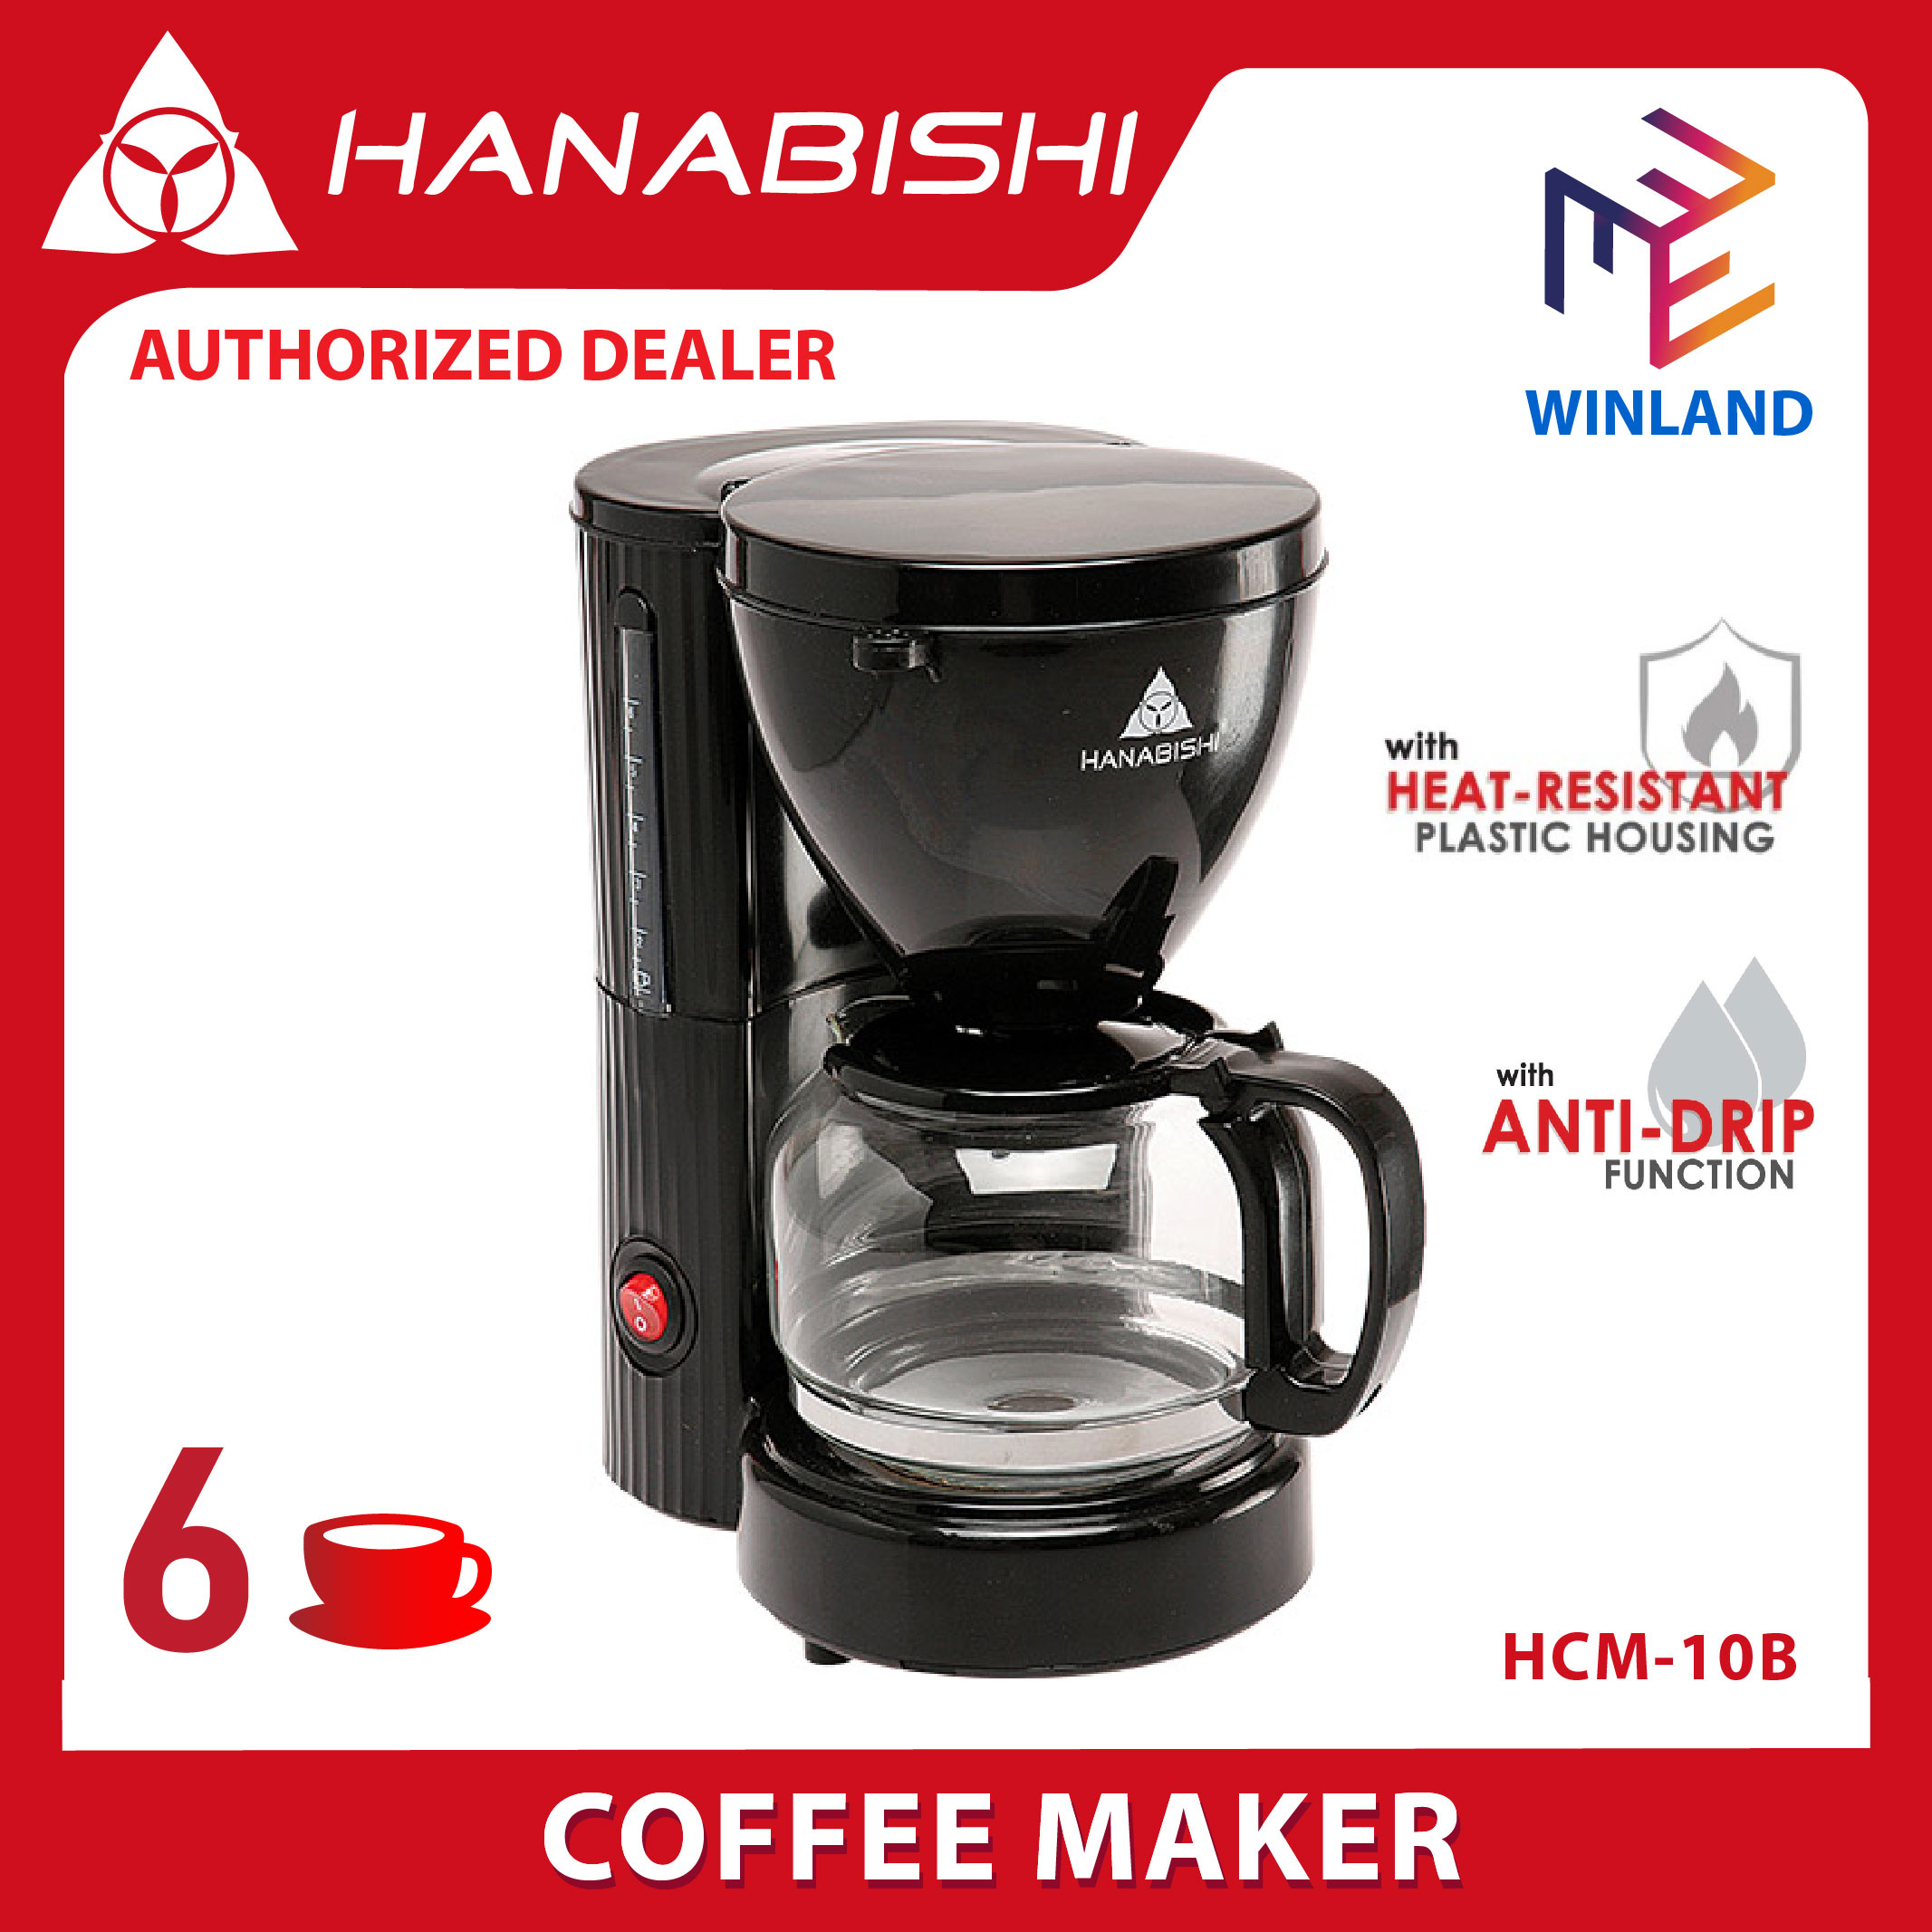 HANABISHI Coffee Cafe Maker Machine (6 cups) by Winland